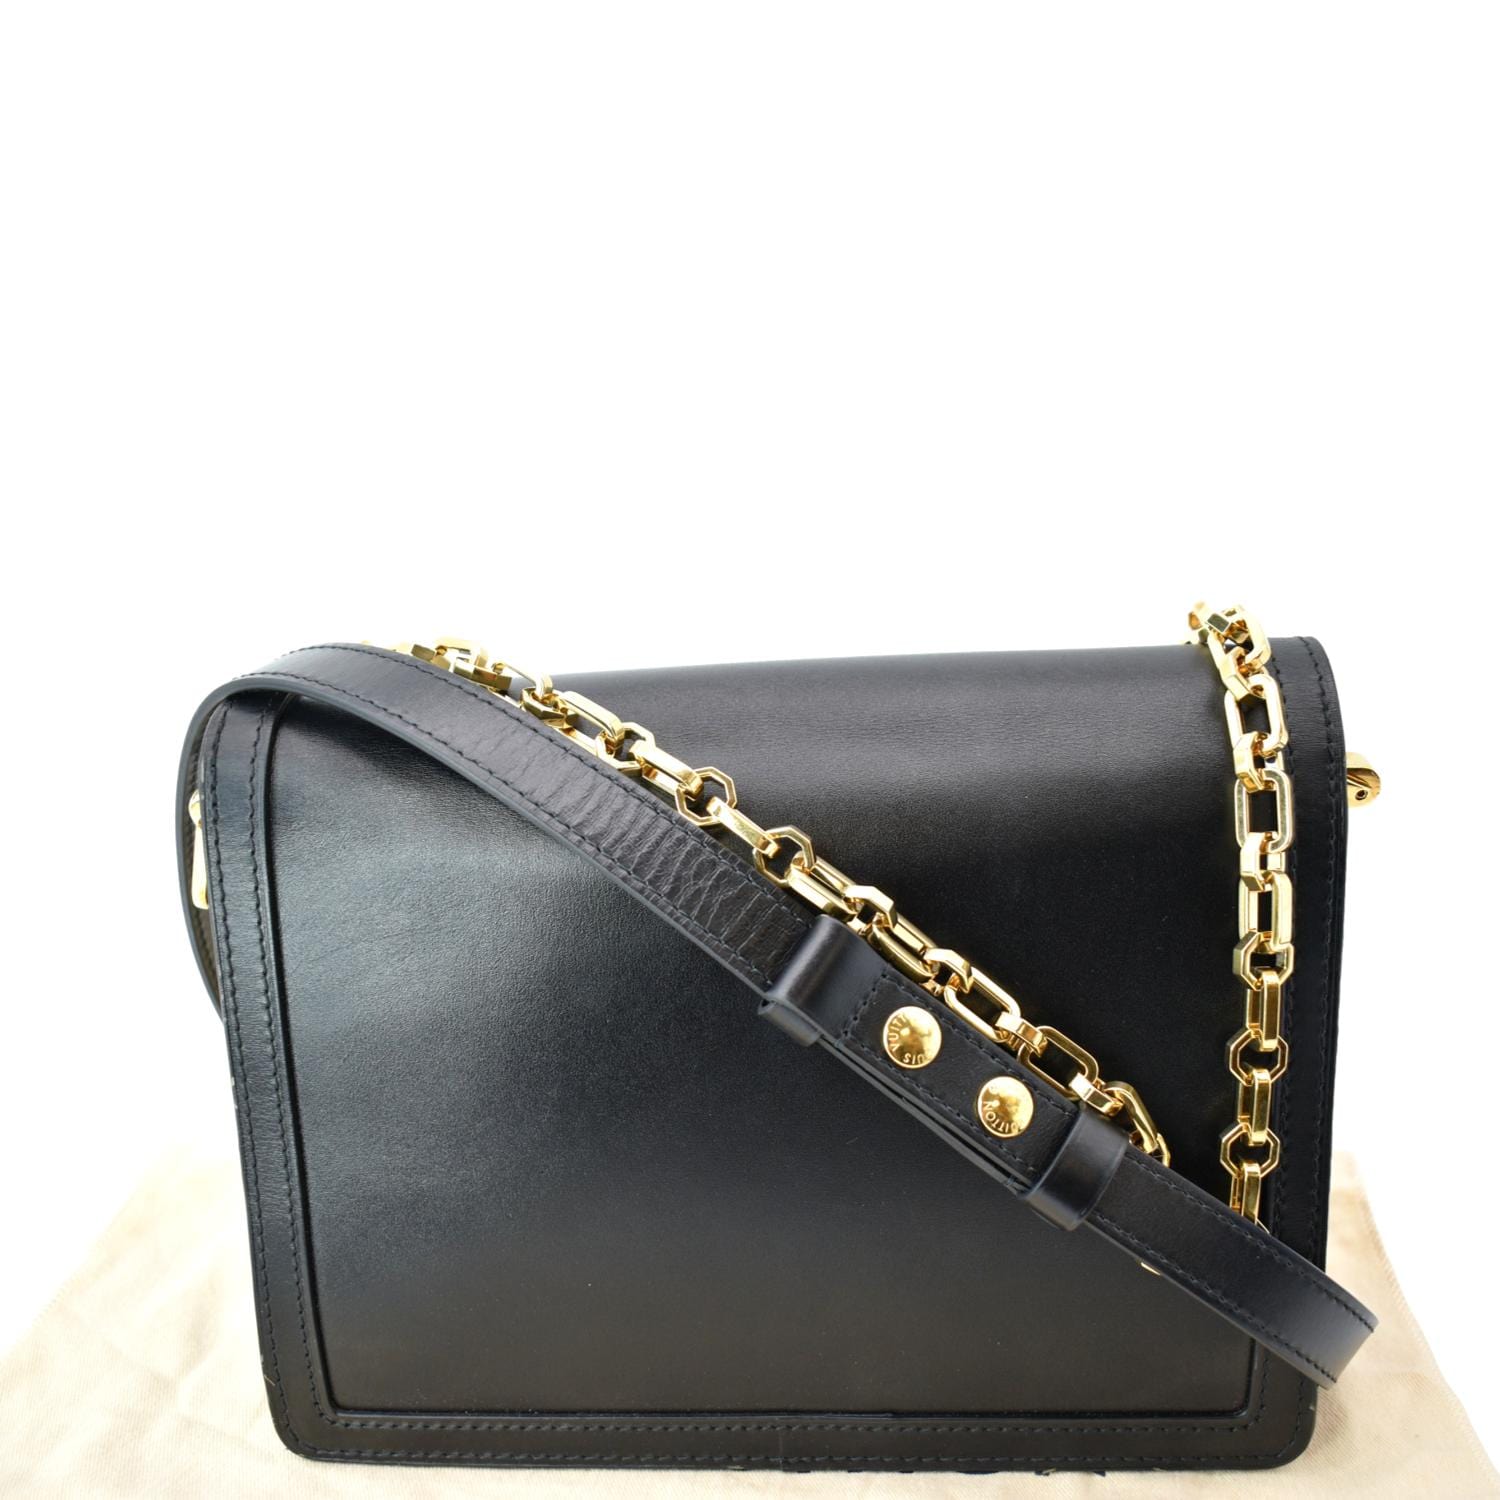 Dauphine MM leather handbag